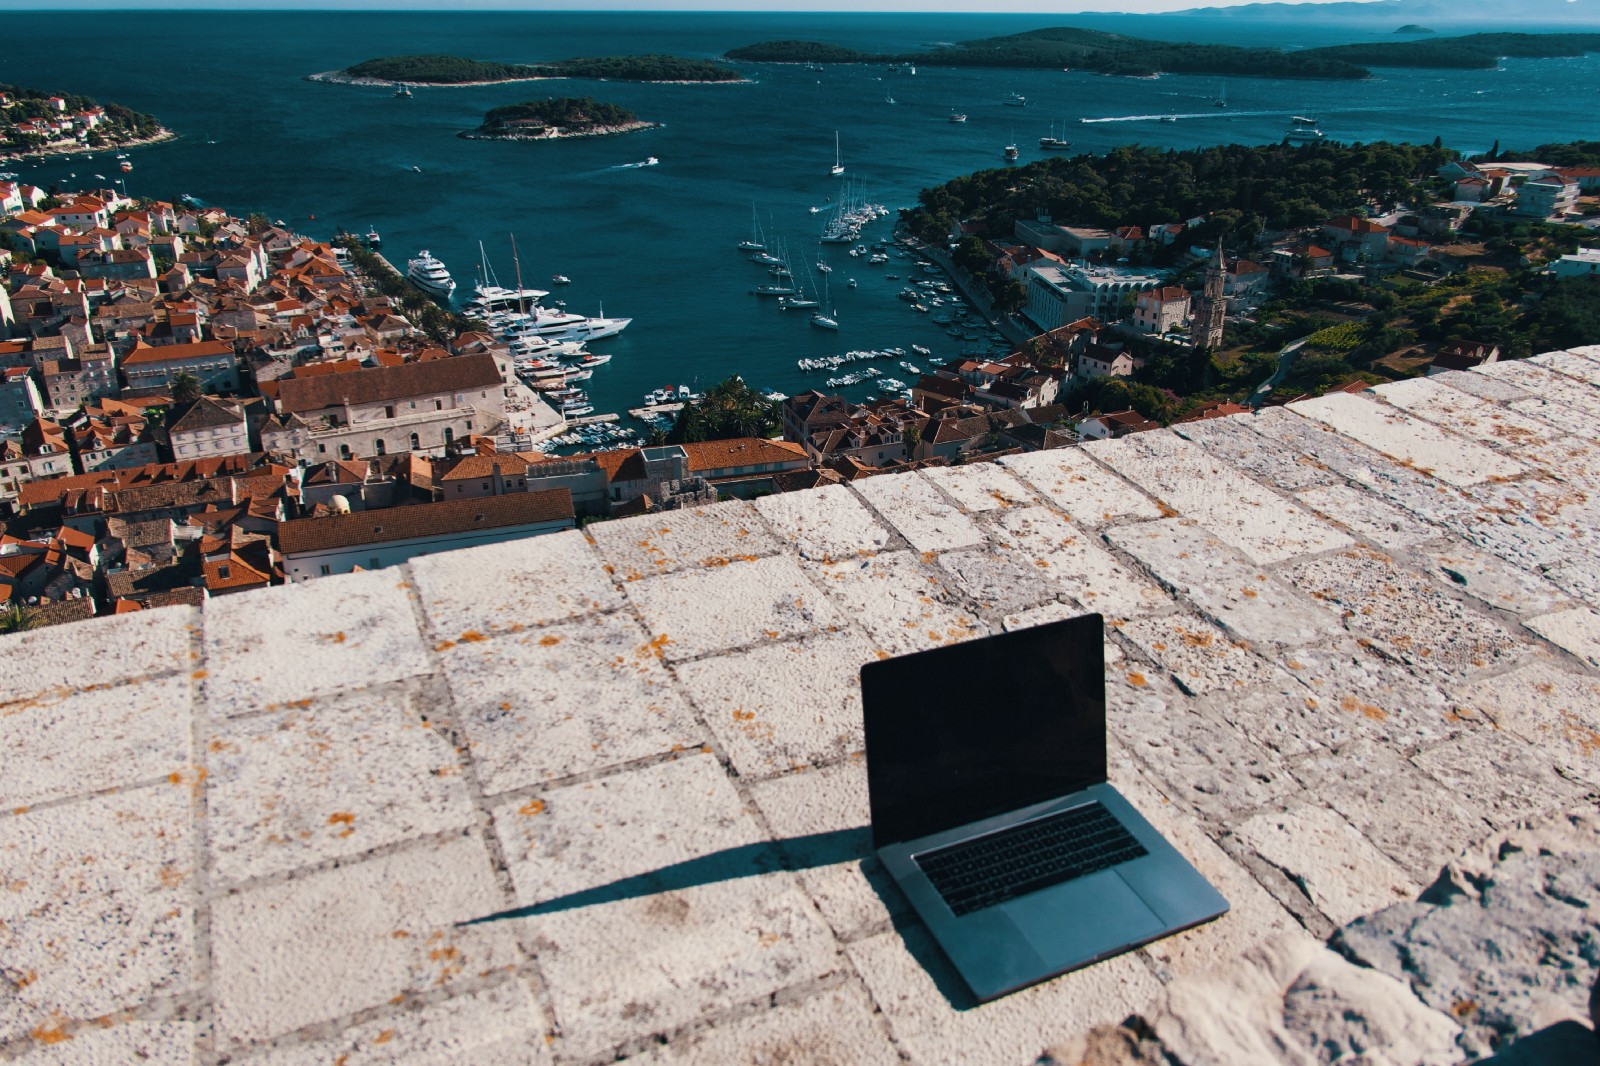 Computer Store nearby Dubrovnik, Croatia: addresses, websites in